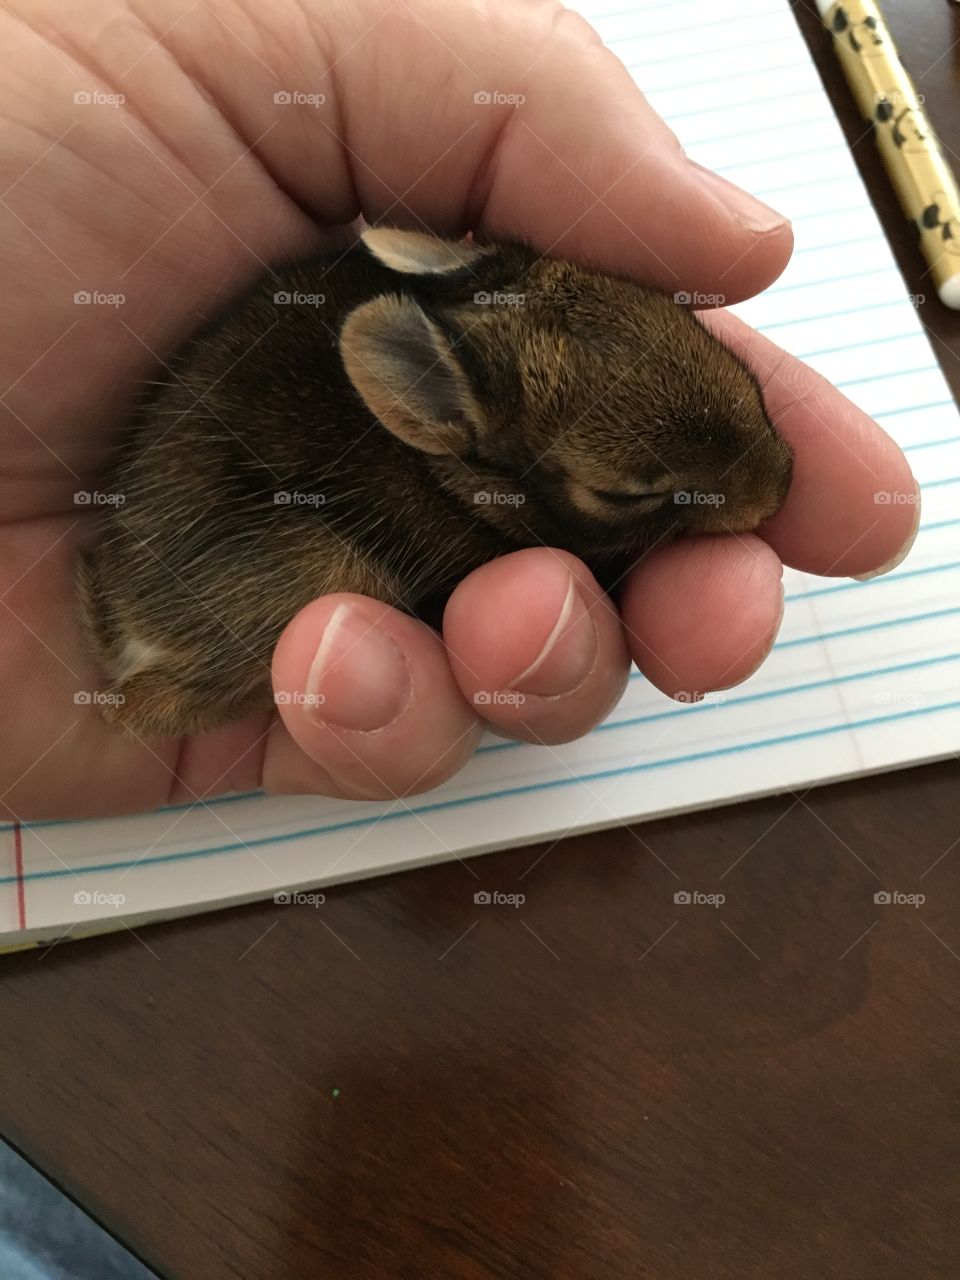 Baby bunny rabbit in the hand.